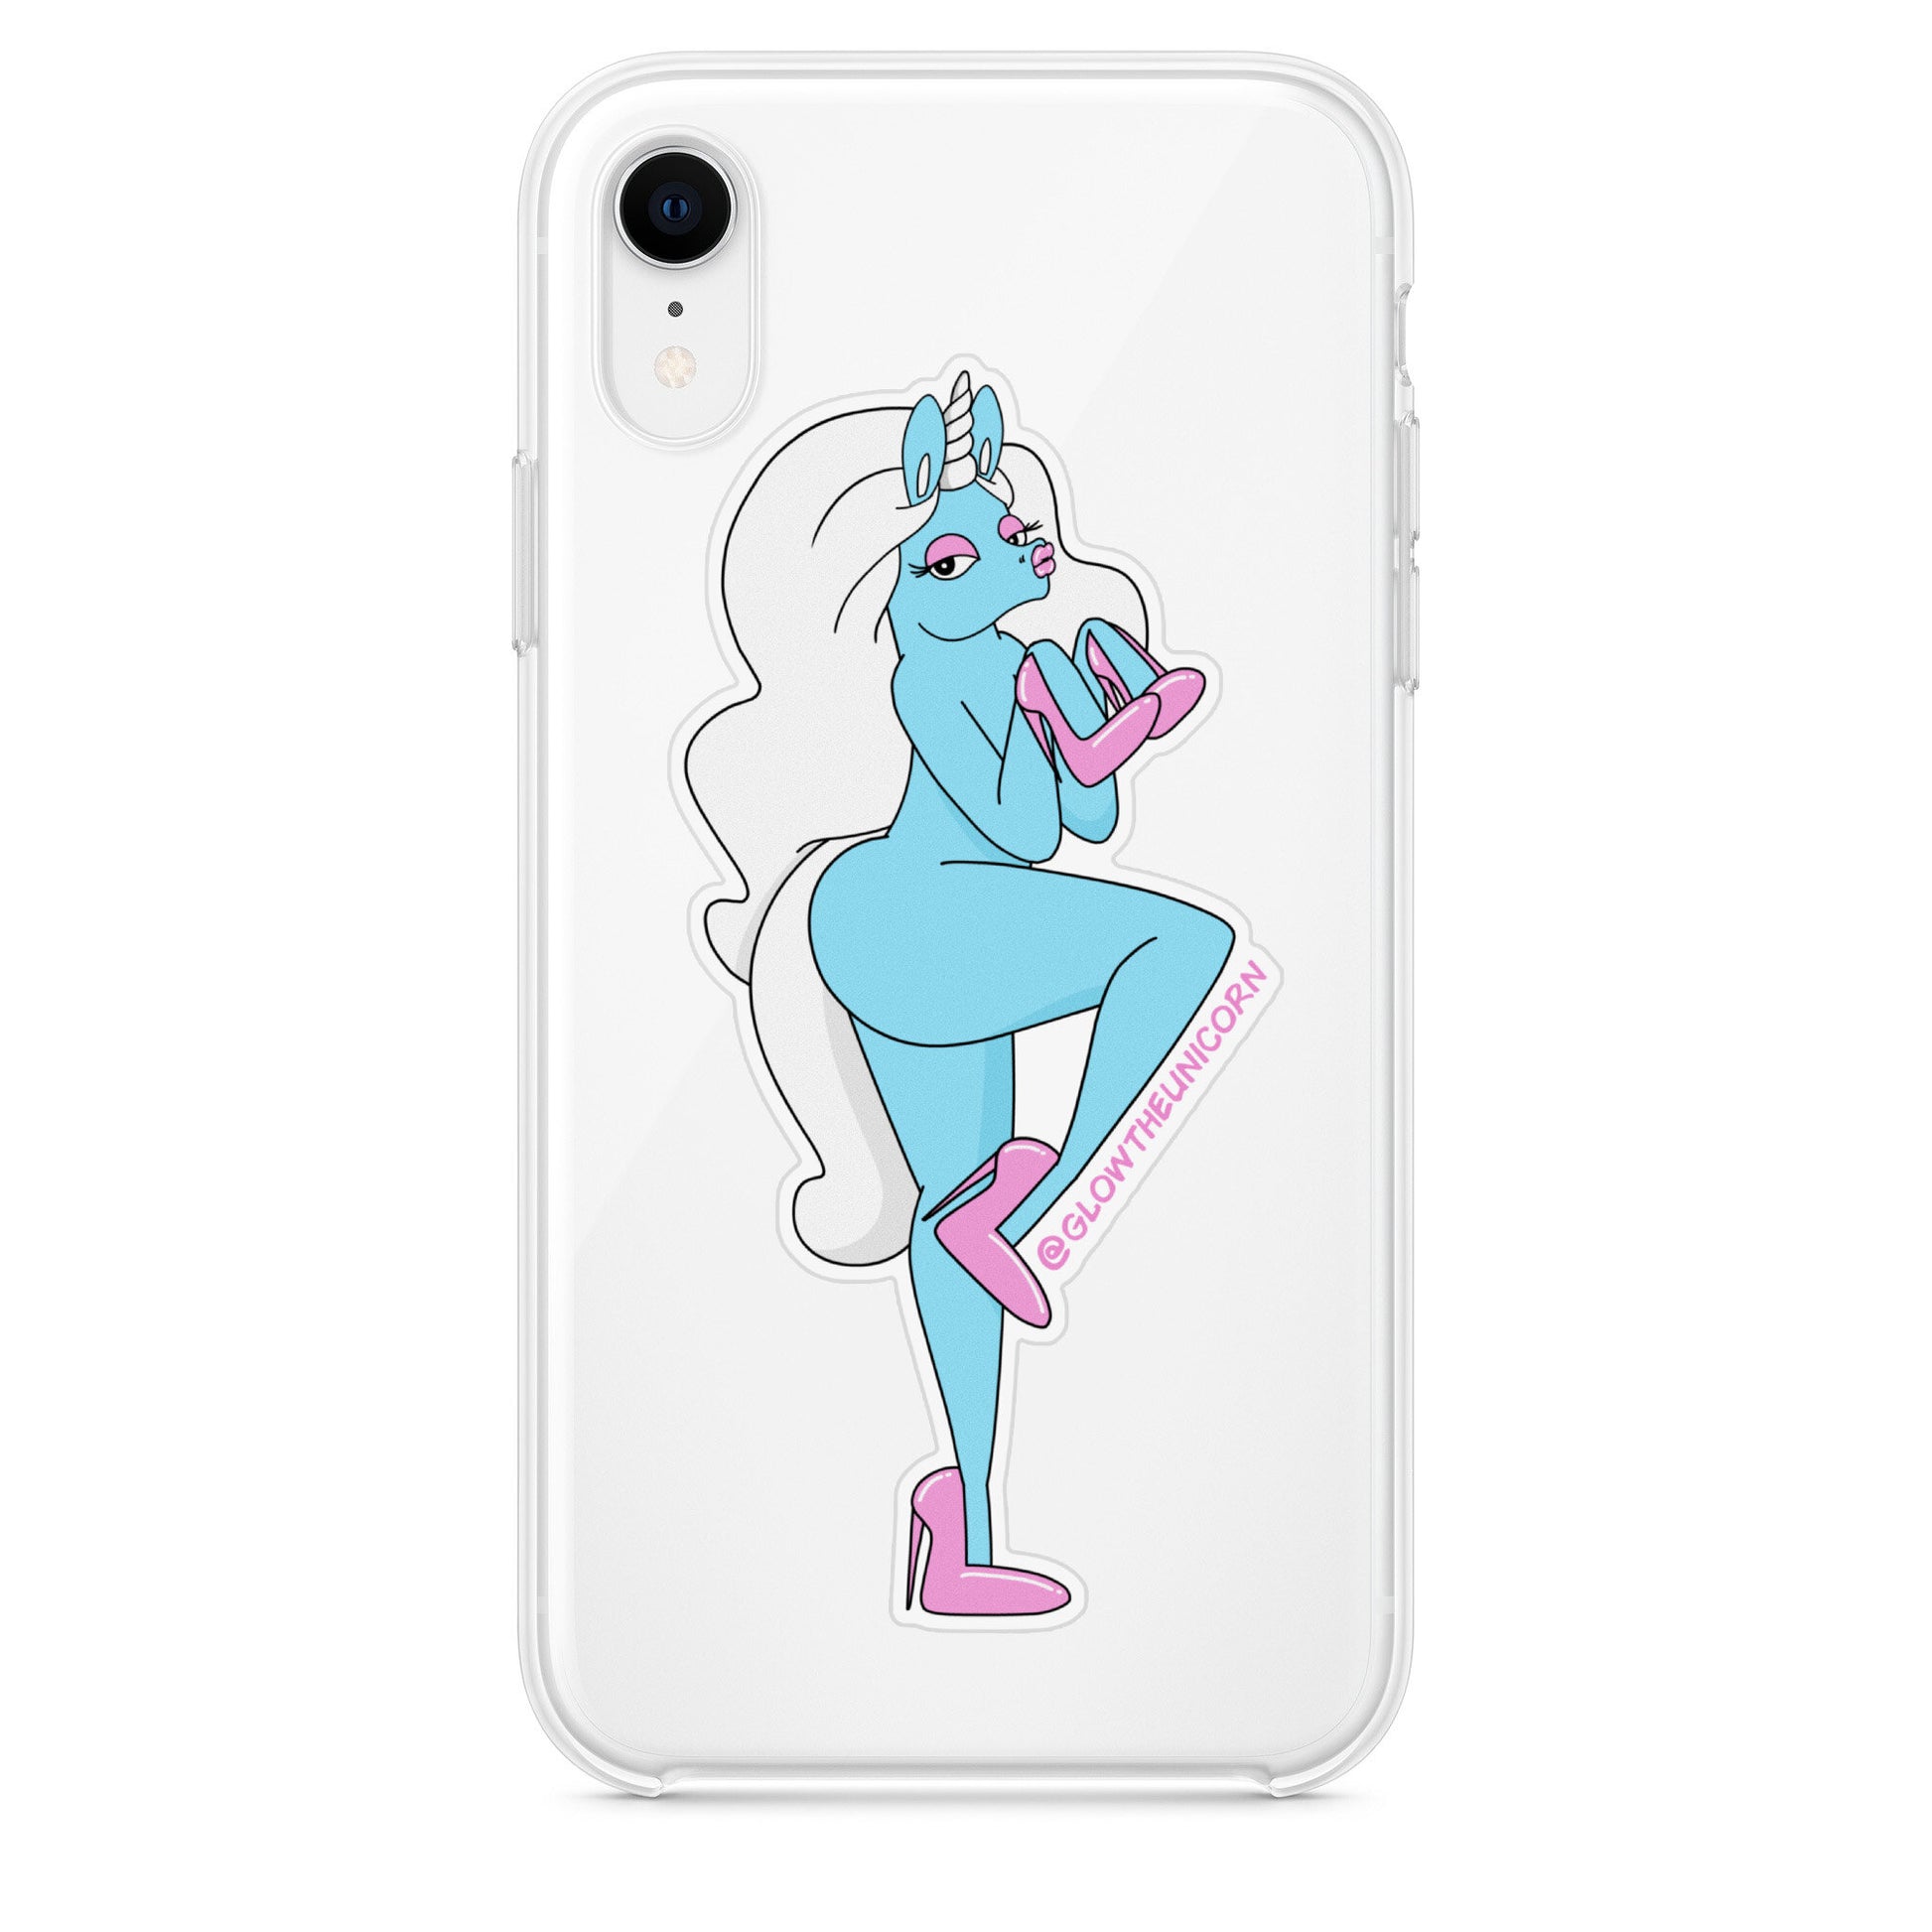 blue unicorn in heels sticker on iPhone